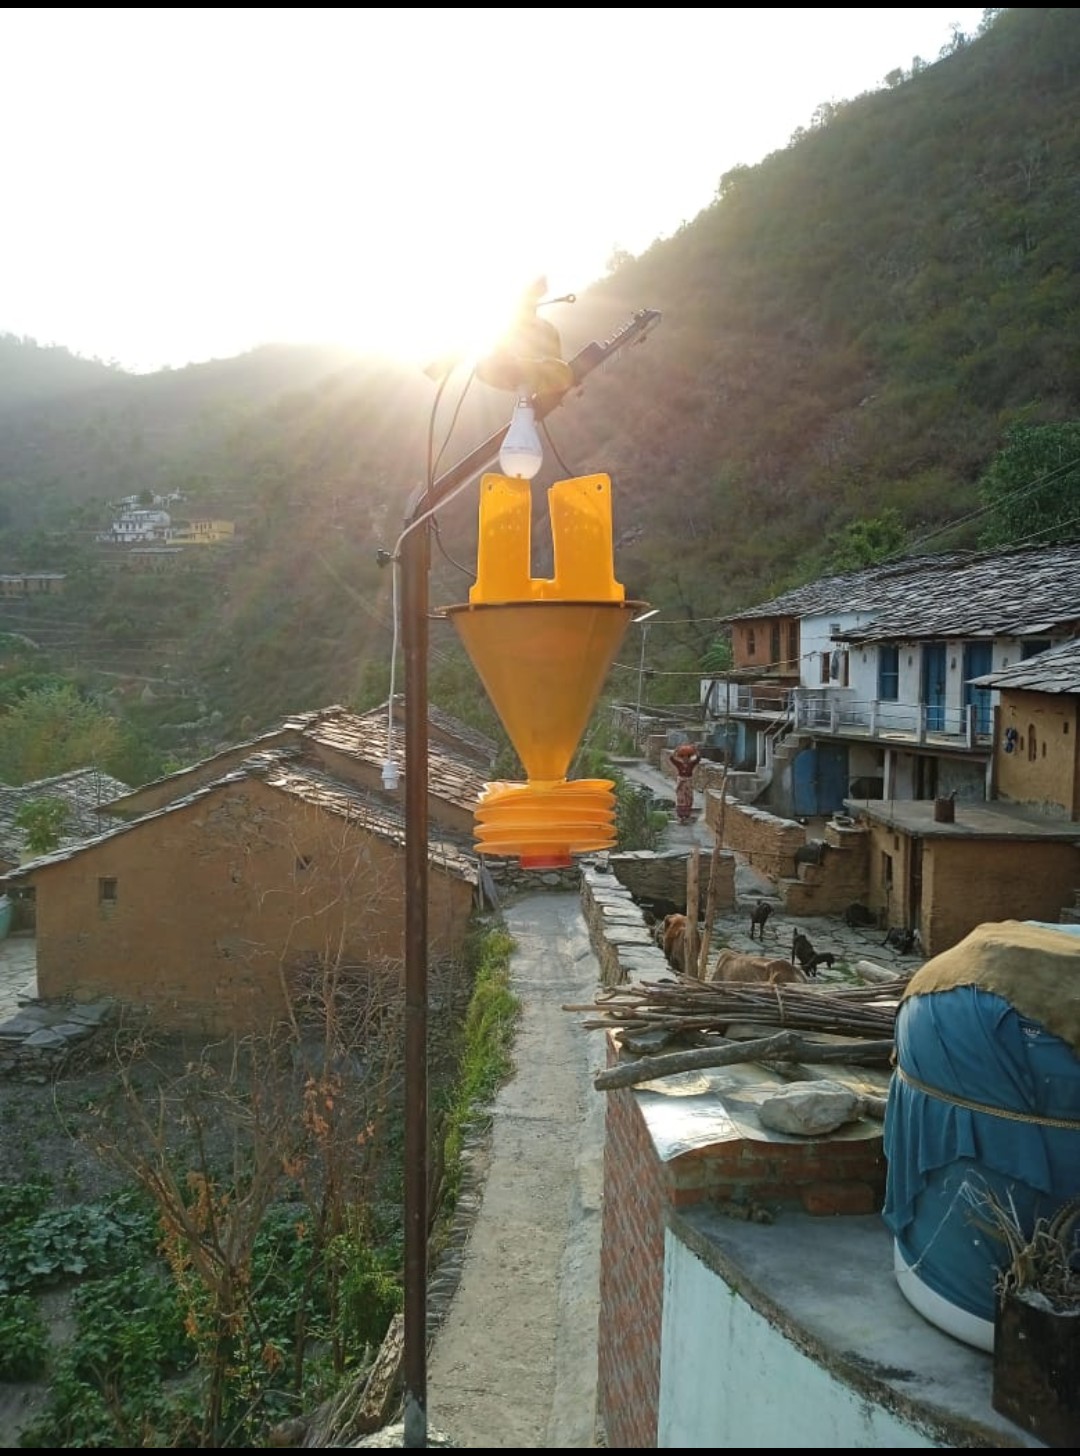 Khanana Mayfanika village, Tehri Garhwal